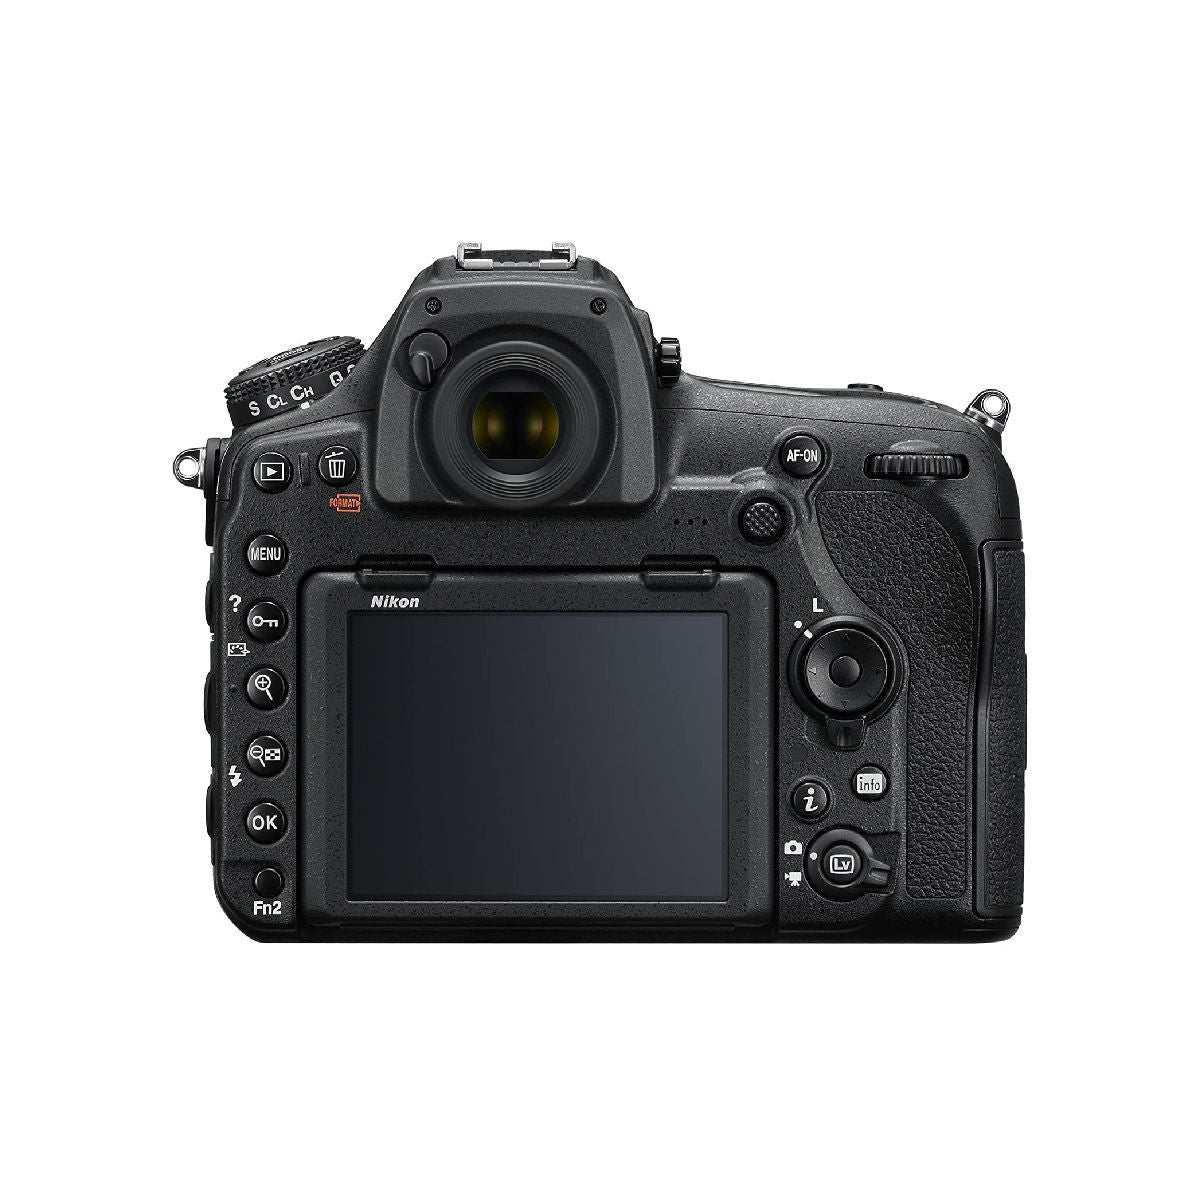 Nikon D850 45.7MP DSLR Camera Body only